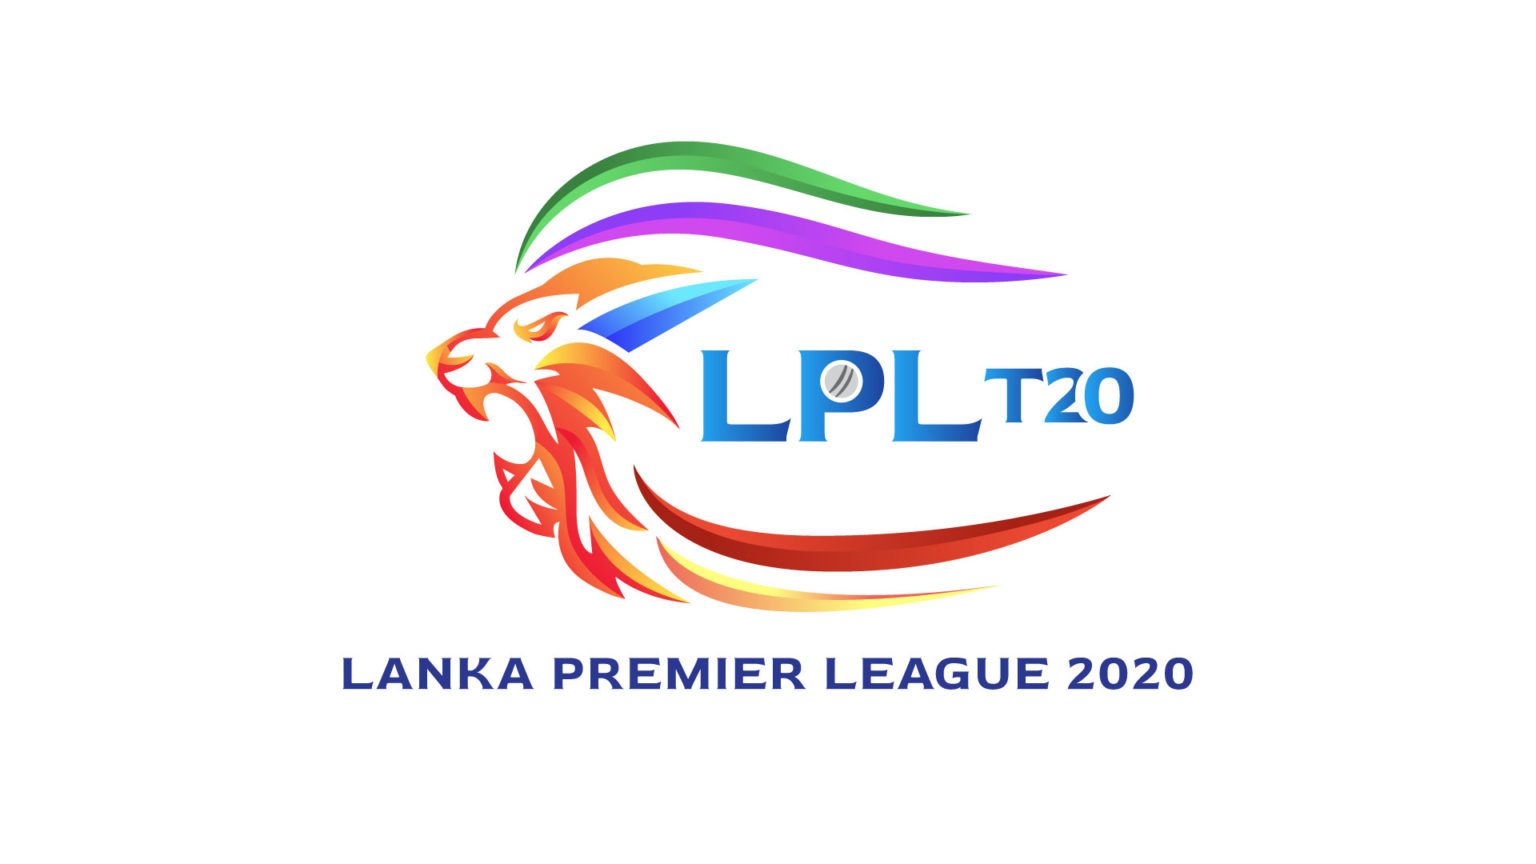 Roaring Lankan lion central theme of LPL logo